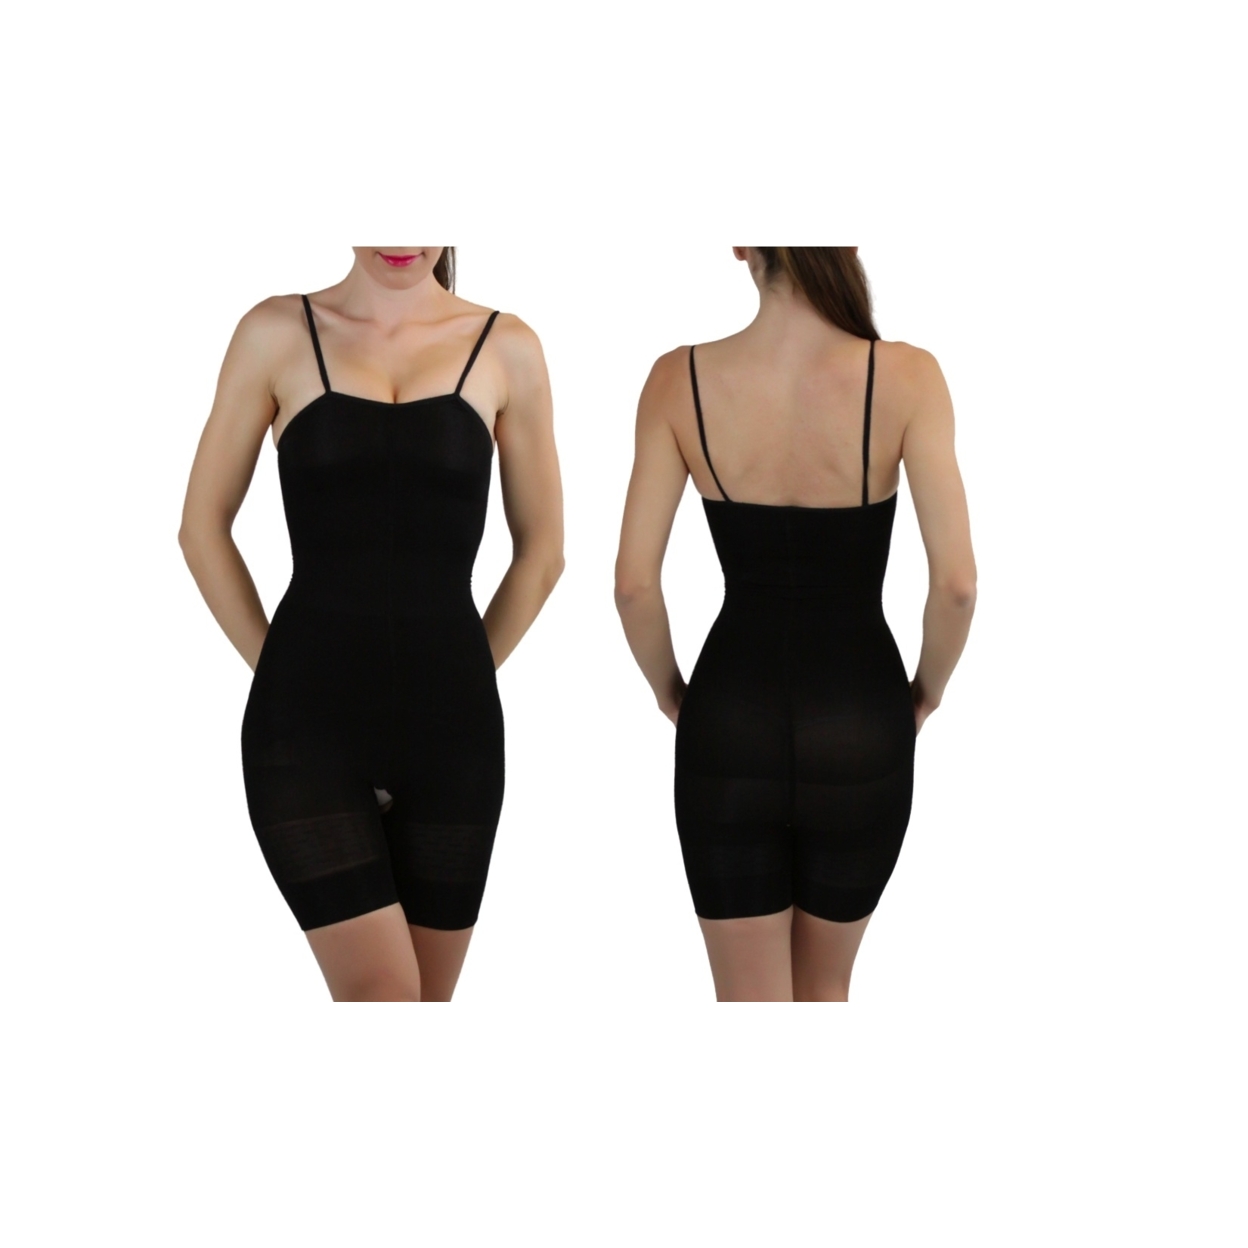 Women's Slimming Body Suit - Black, 2X